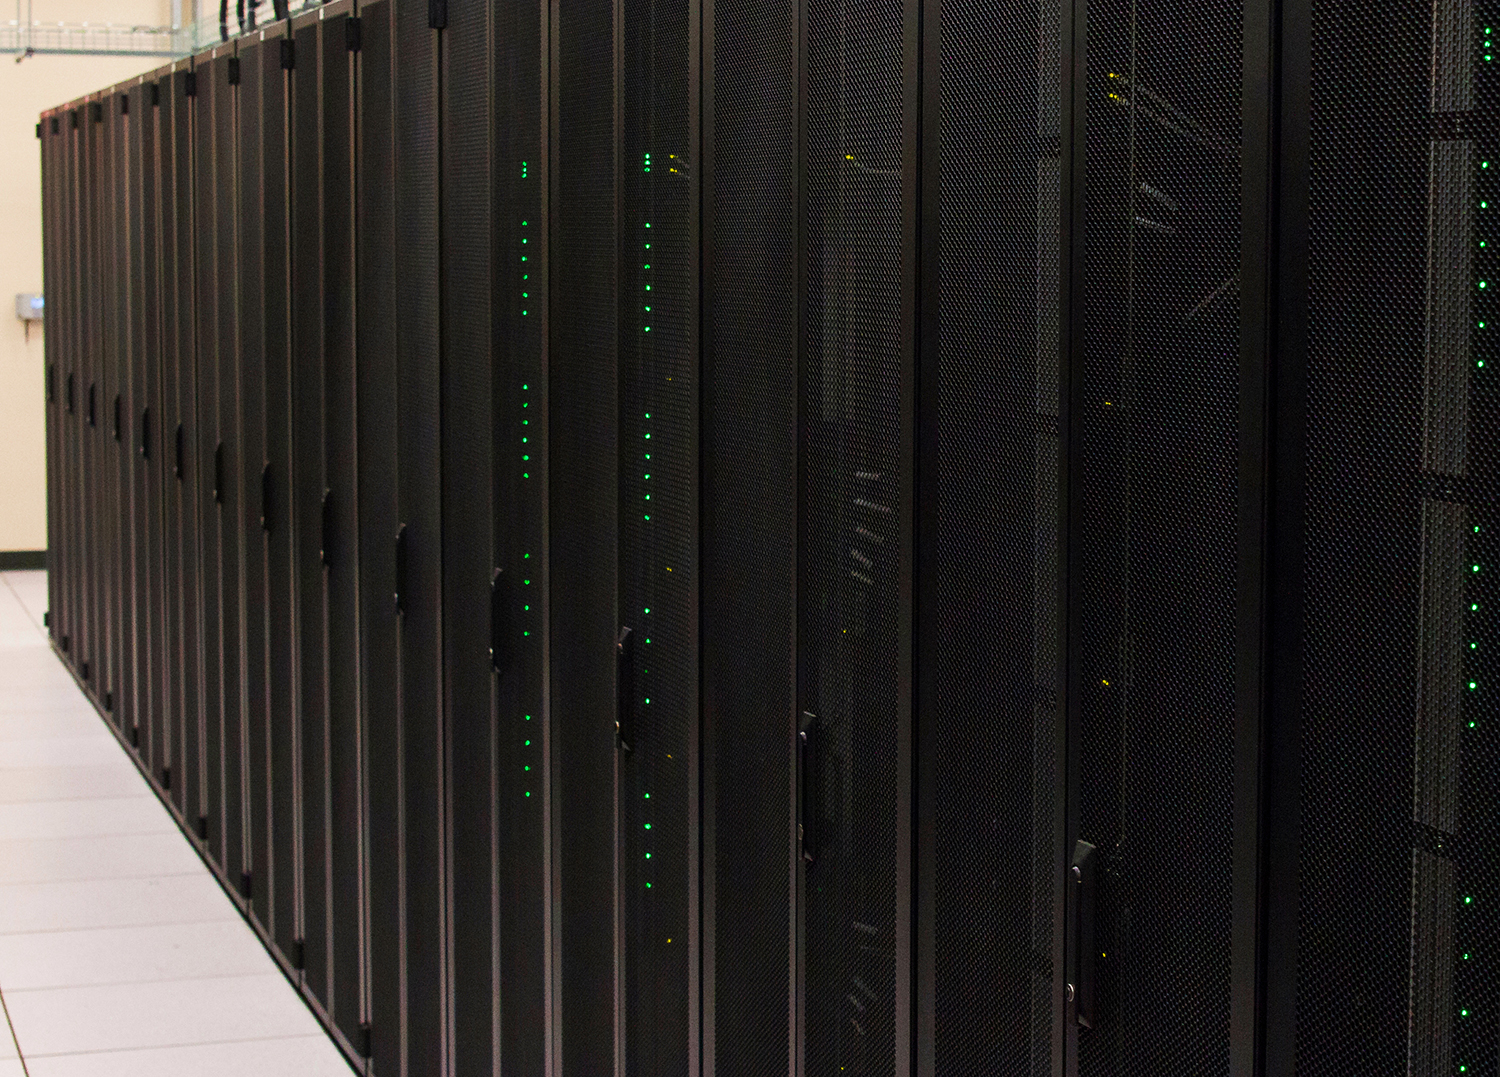 A row of servers inside UAlbany's Data Center.